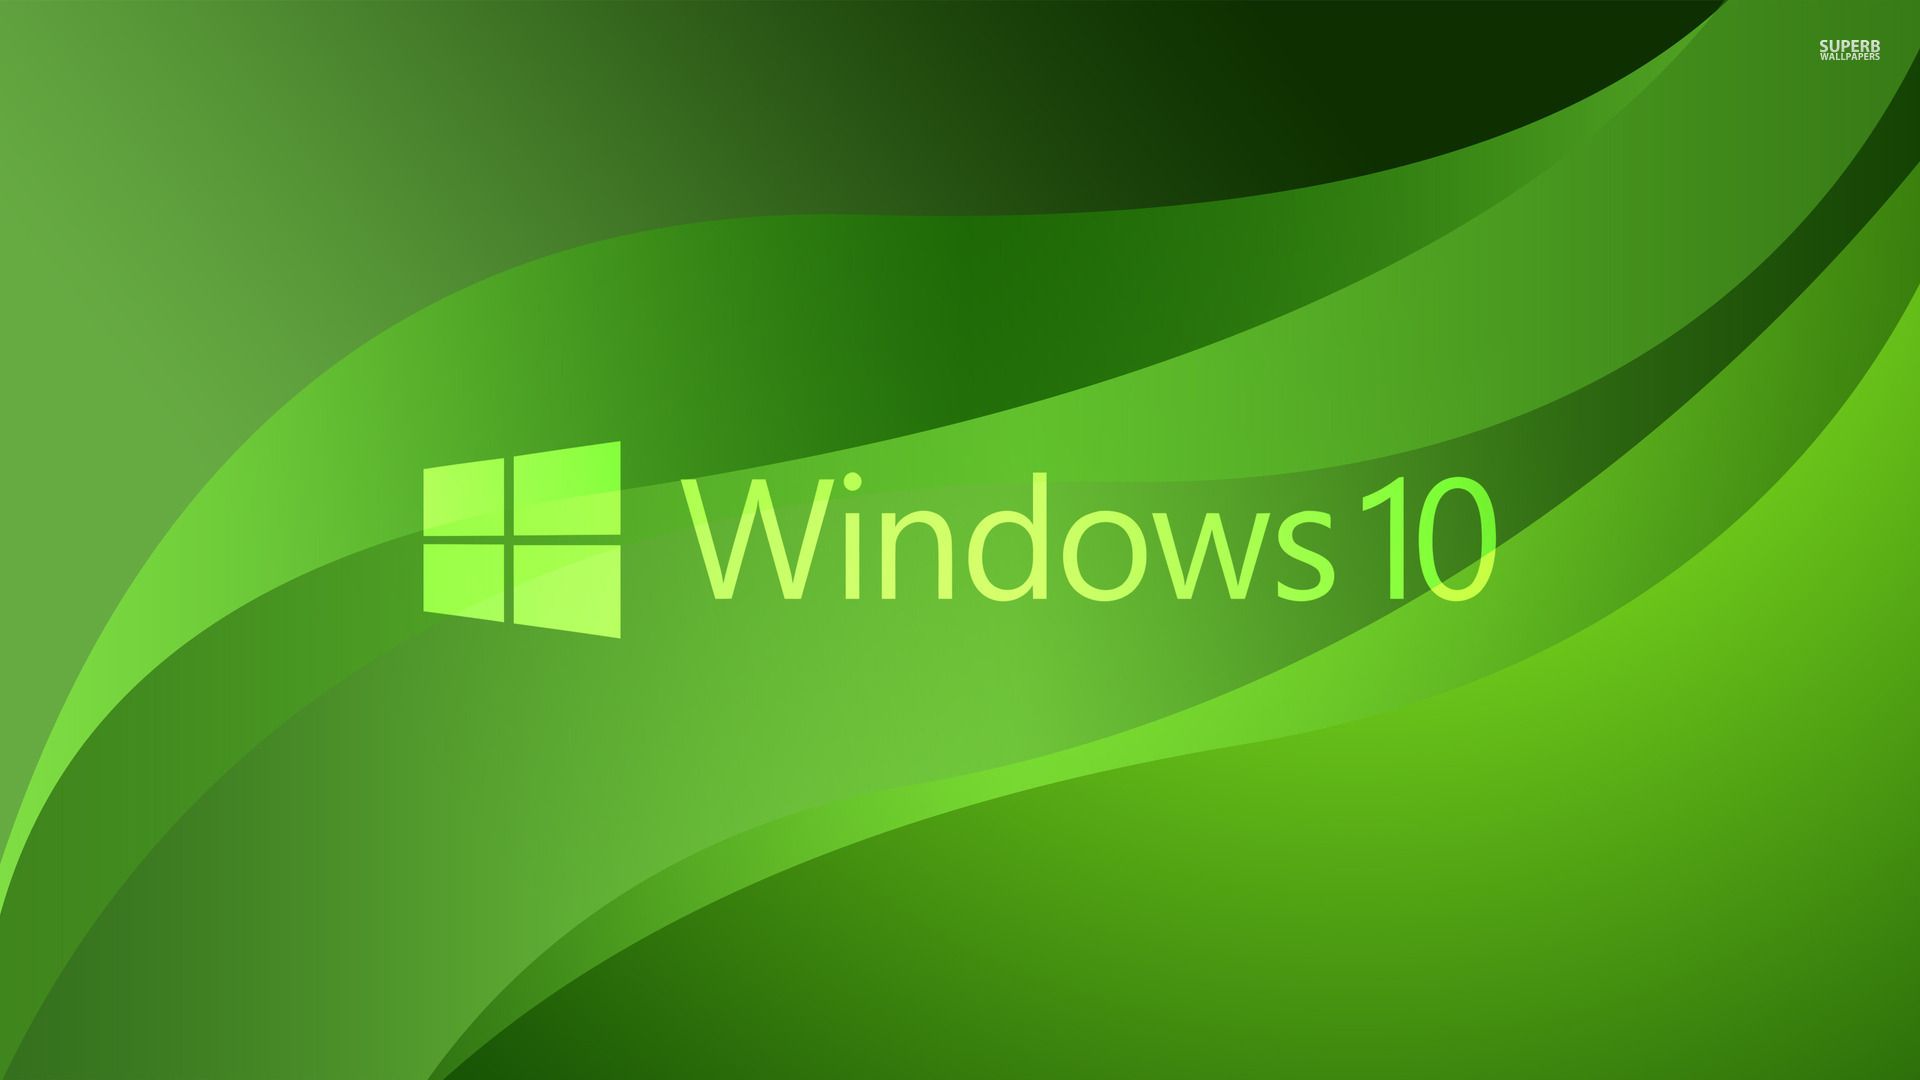 Windows 10 Wallpaper HD 10 Desktop Background Green Wallpaper & Background Download